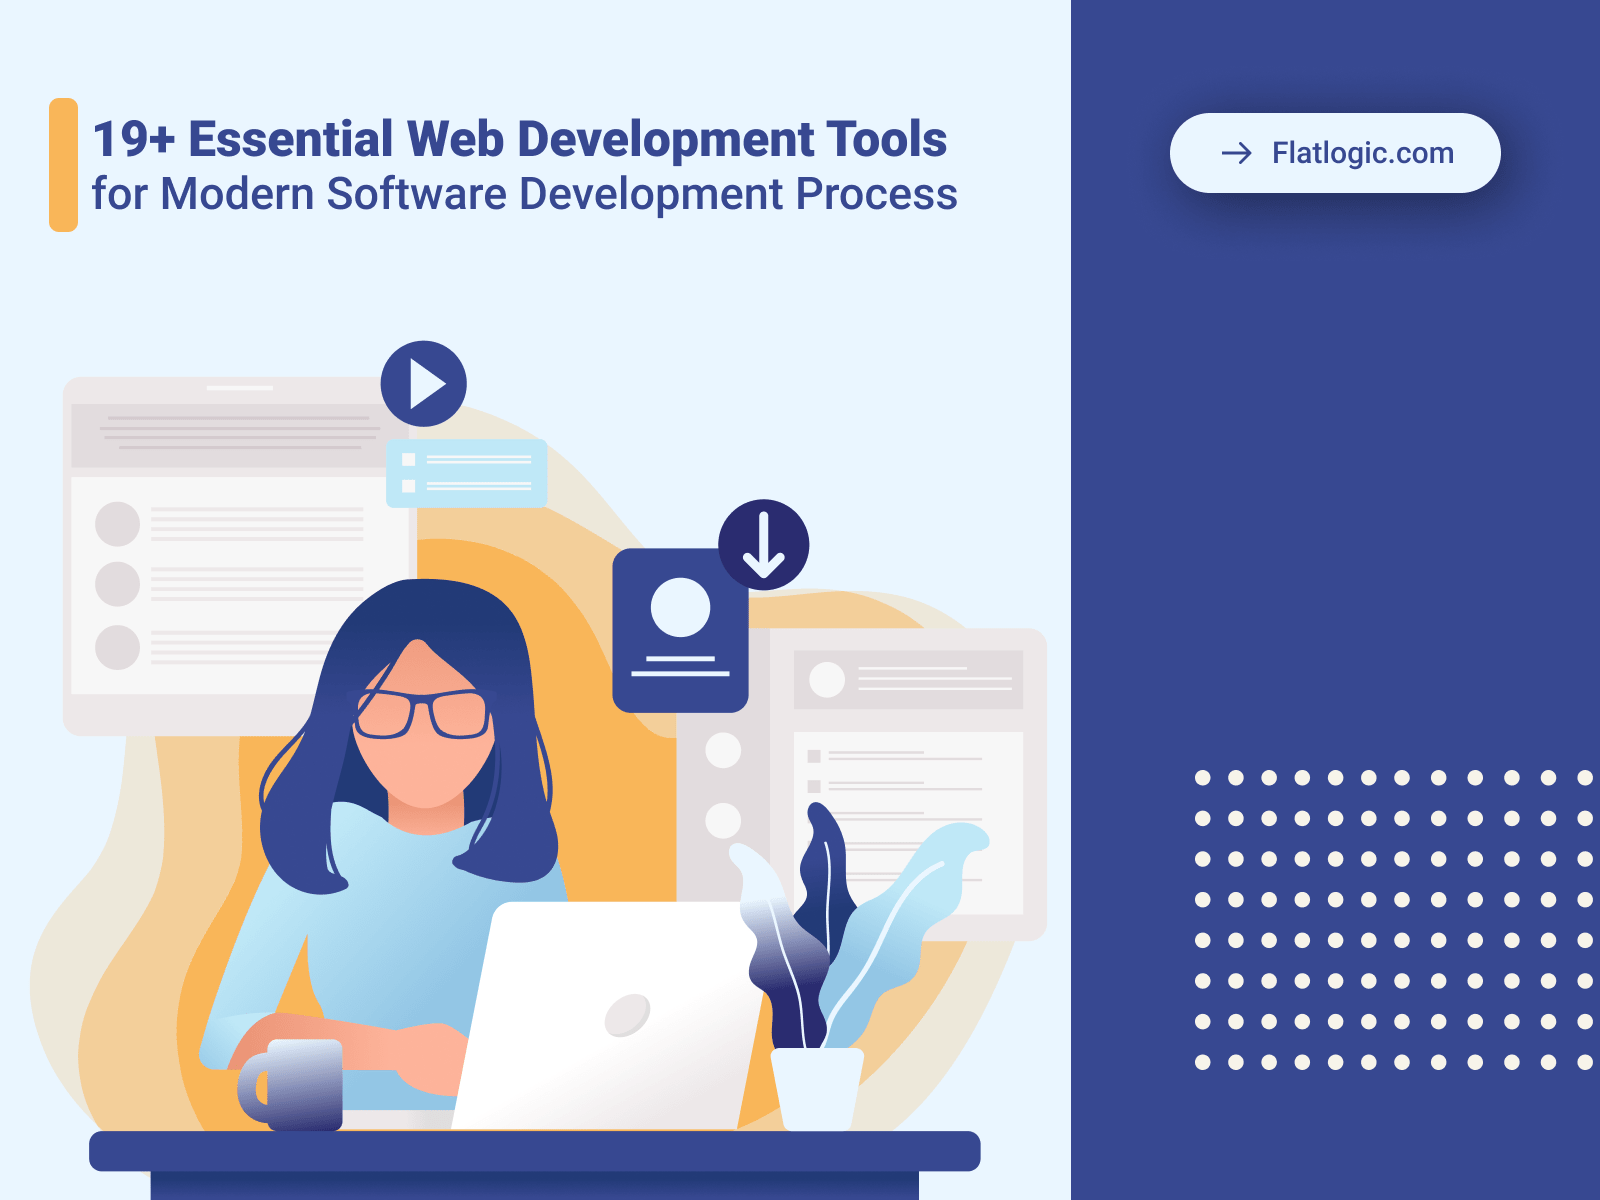 19+ Essential Web Development Tools for the Modern Software Development Process